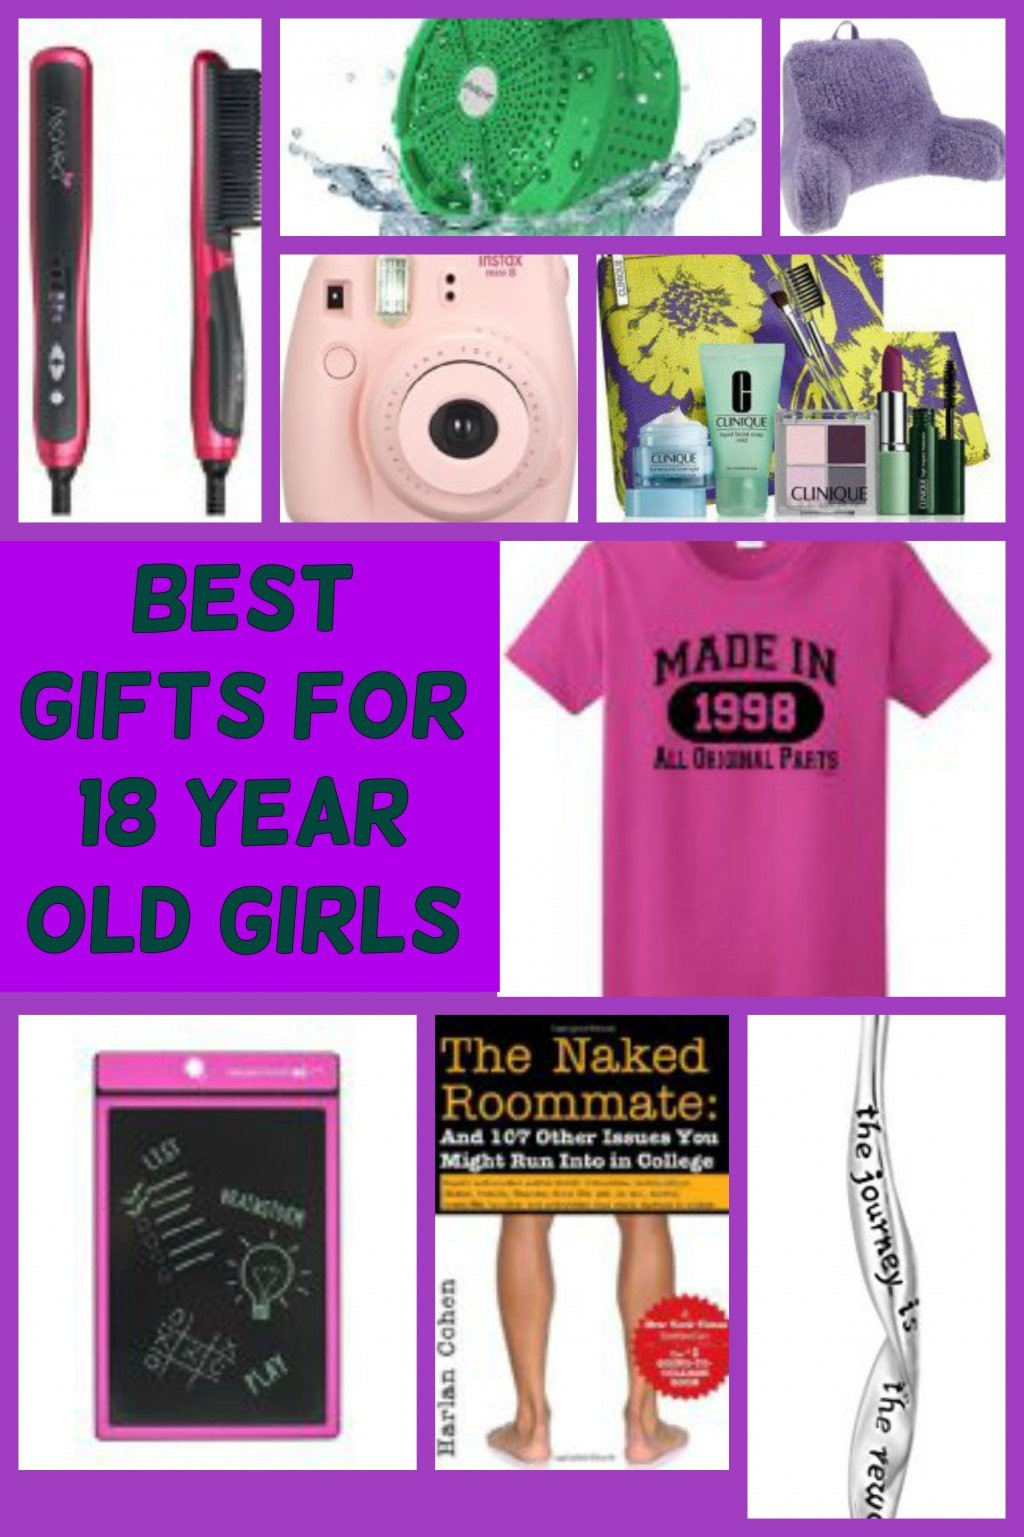 Gift Ideas For 18 Year Old Girls
 Popular Birthday and Christmas Gift Ideas for 18 Year Old